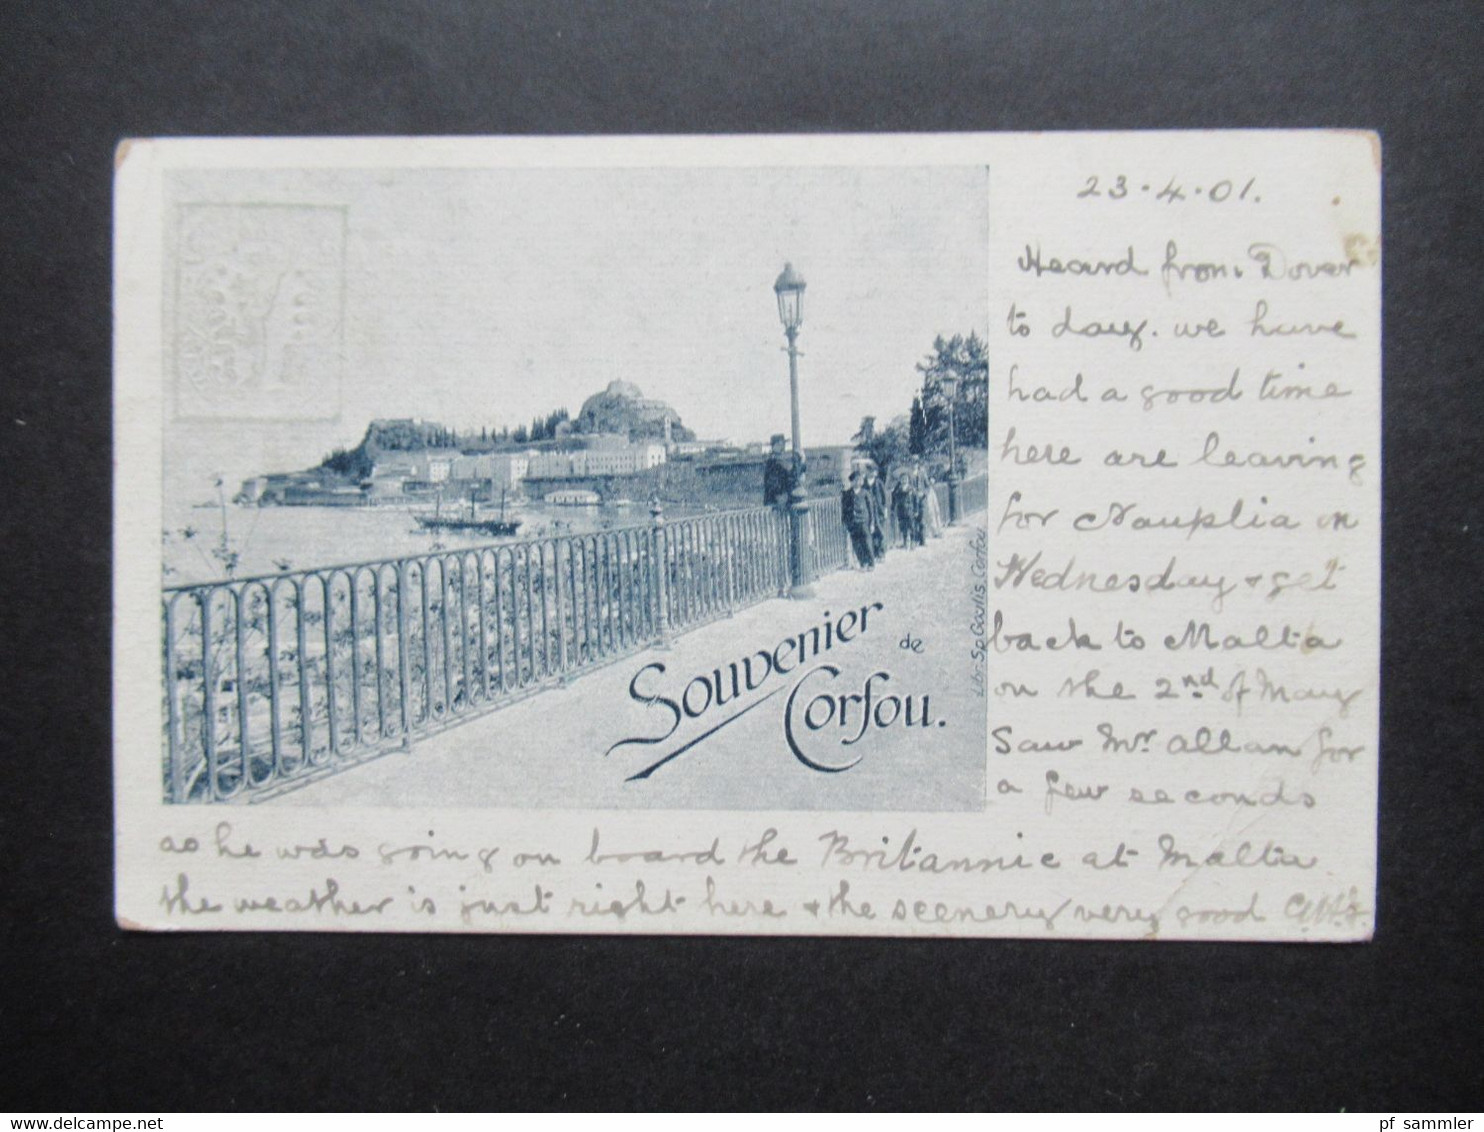 Griechenland 1901 Ganzsache / Bildpostkarte Souvenir De Corfou Libr. Sp. Goulis Corfou Nach Chatham England Gesendet - Interi Postali